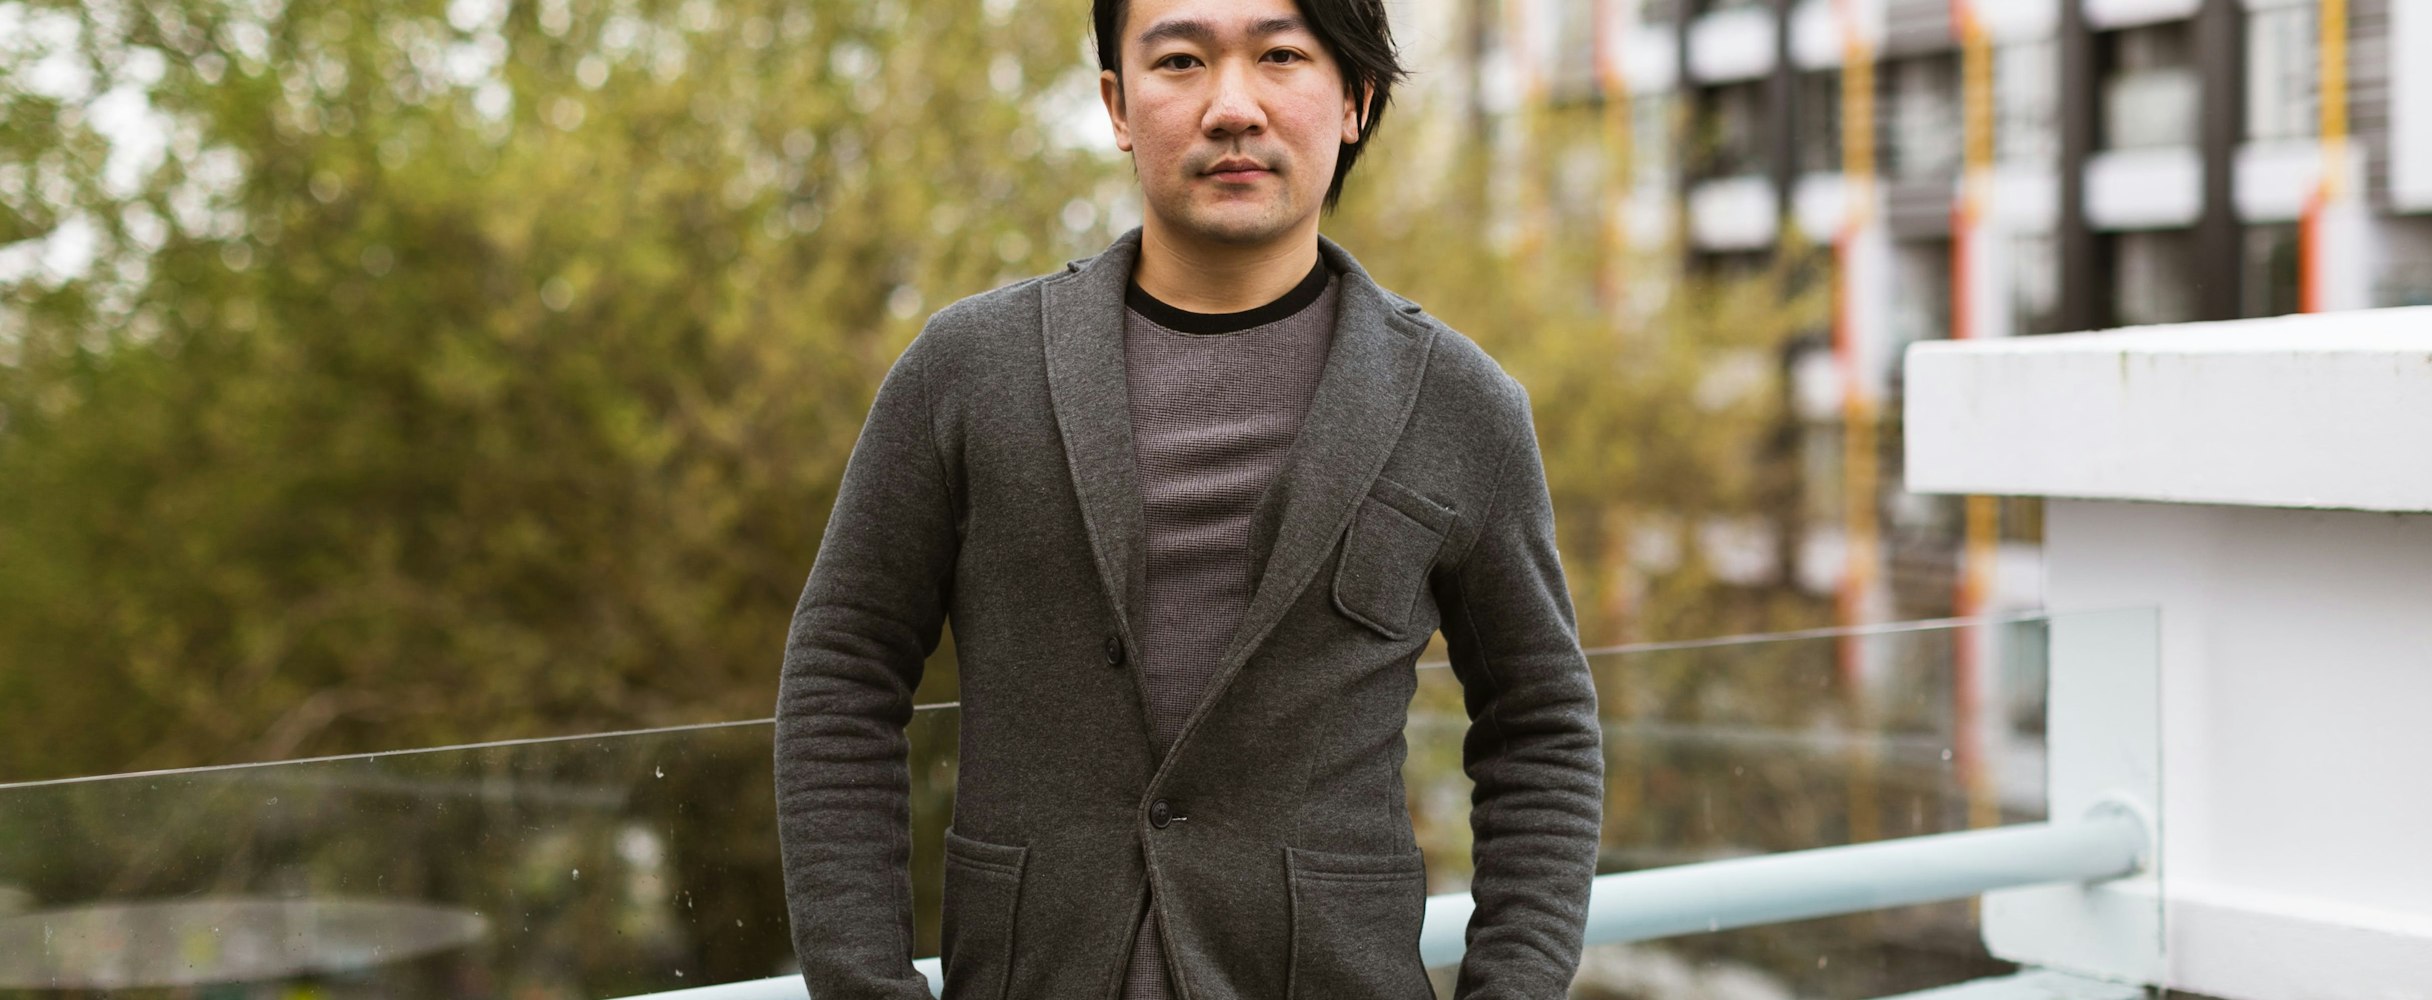 Meet the Narrative team: 
Senior AI Engineer, Dr. Alex Wang